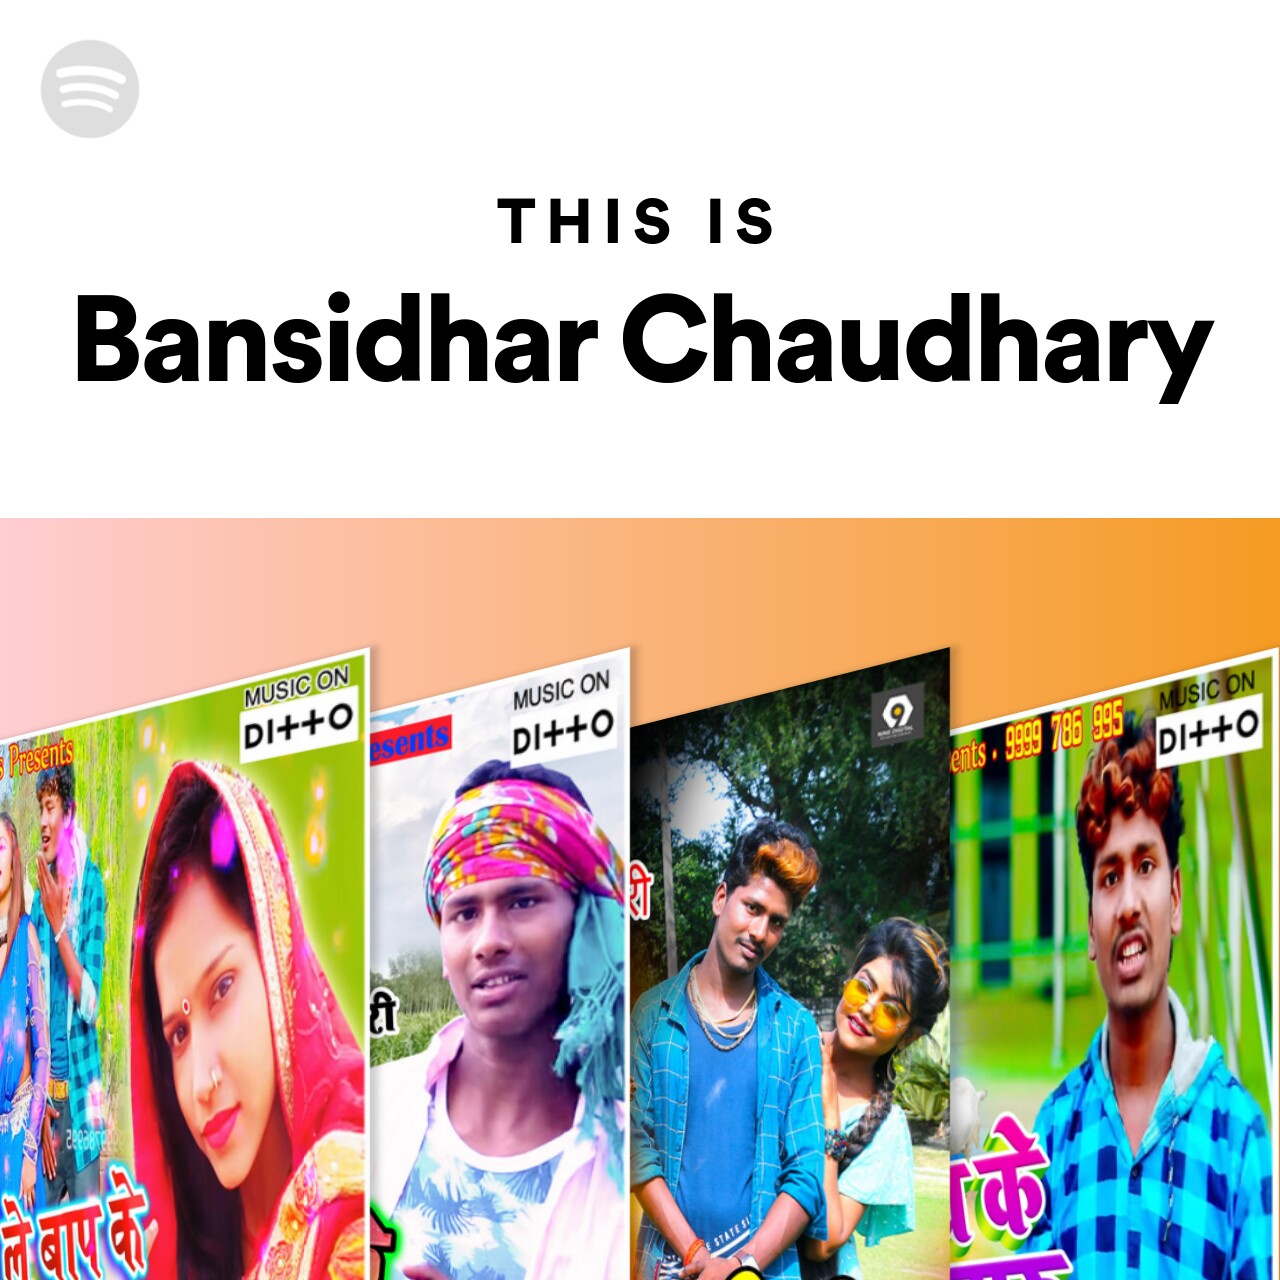 This Is Bansidhar Chaudhary